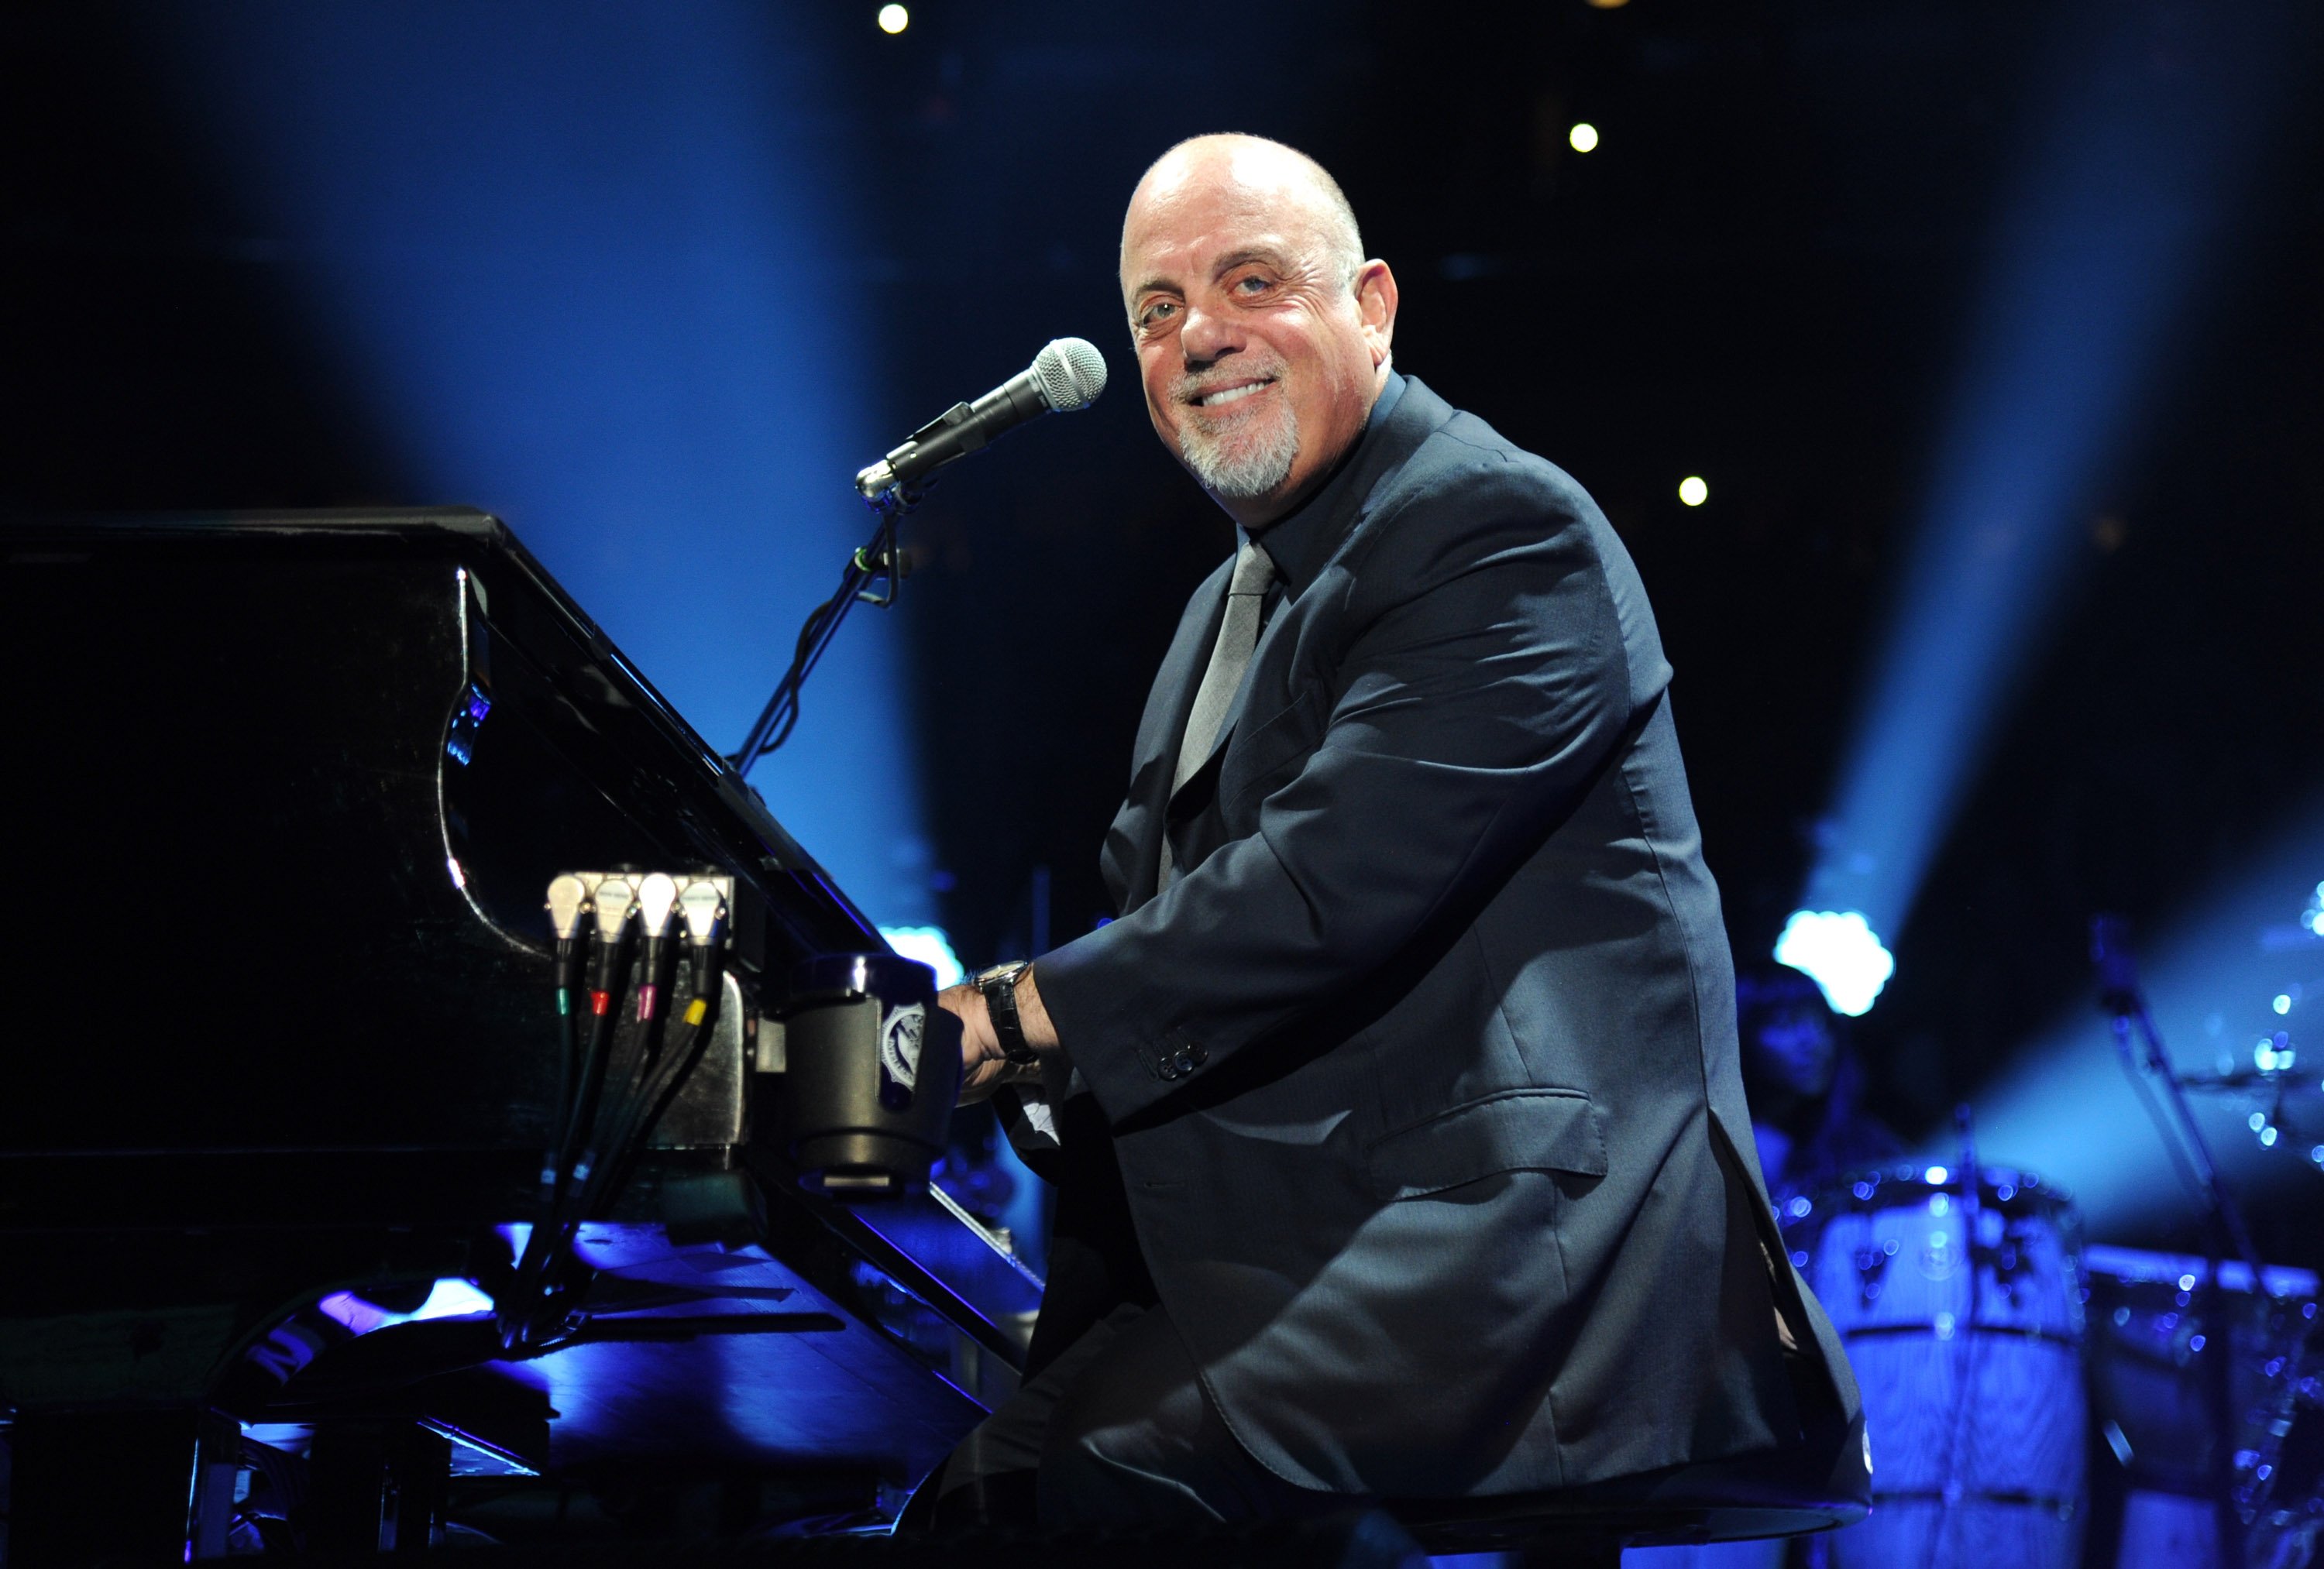 Billy Joel at Piano, 65th birthday at Madison Square Garden 